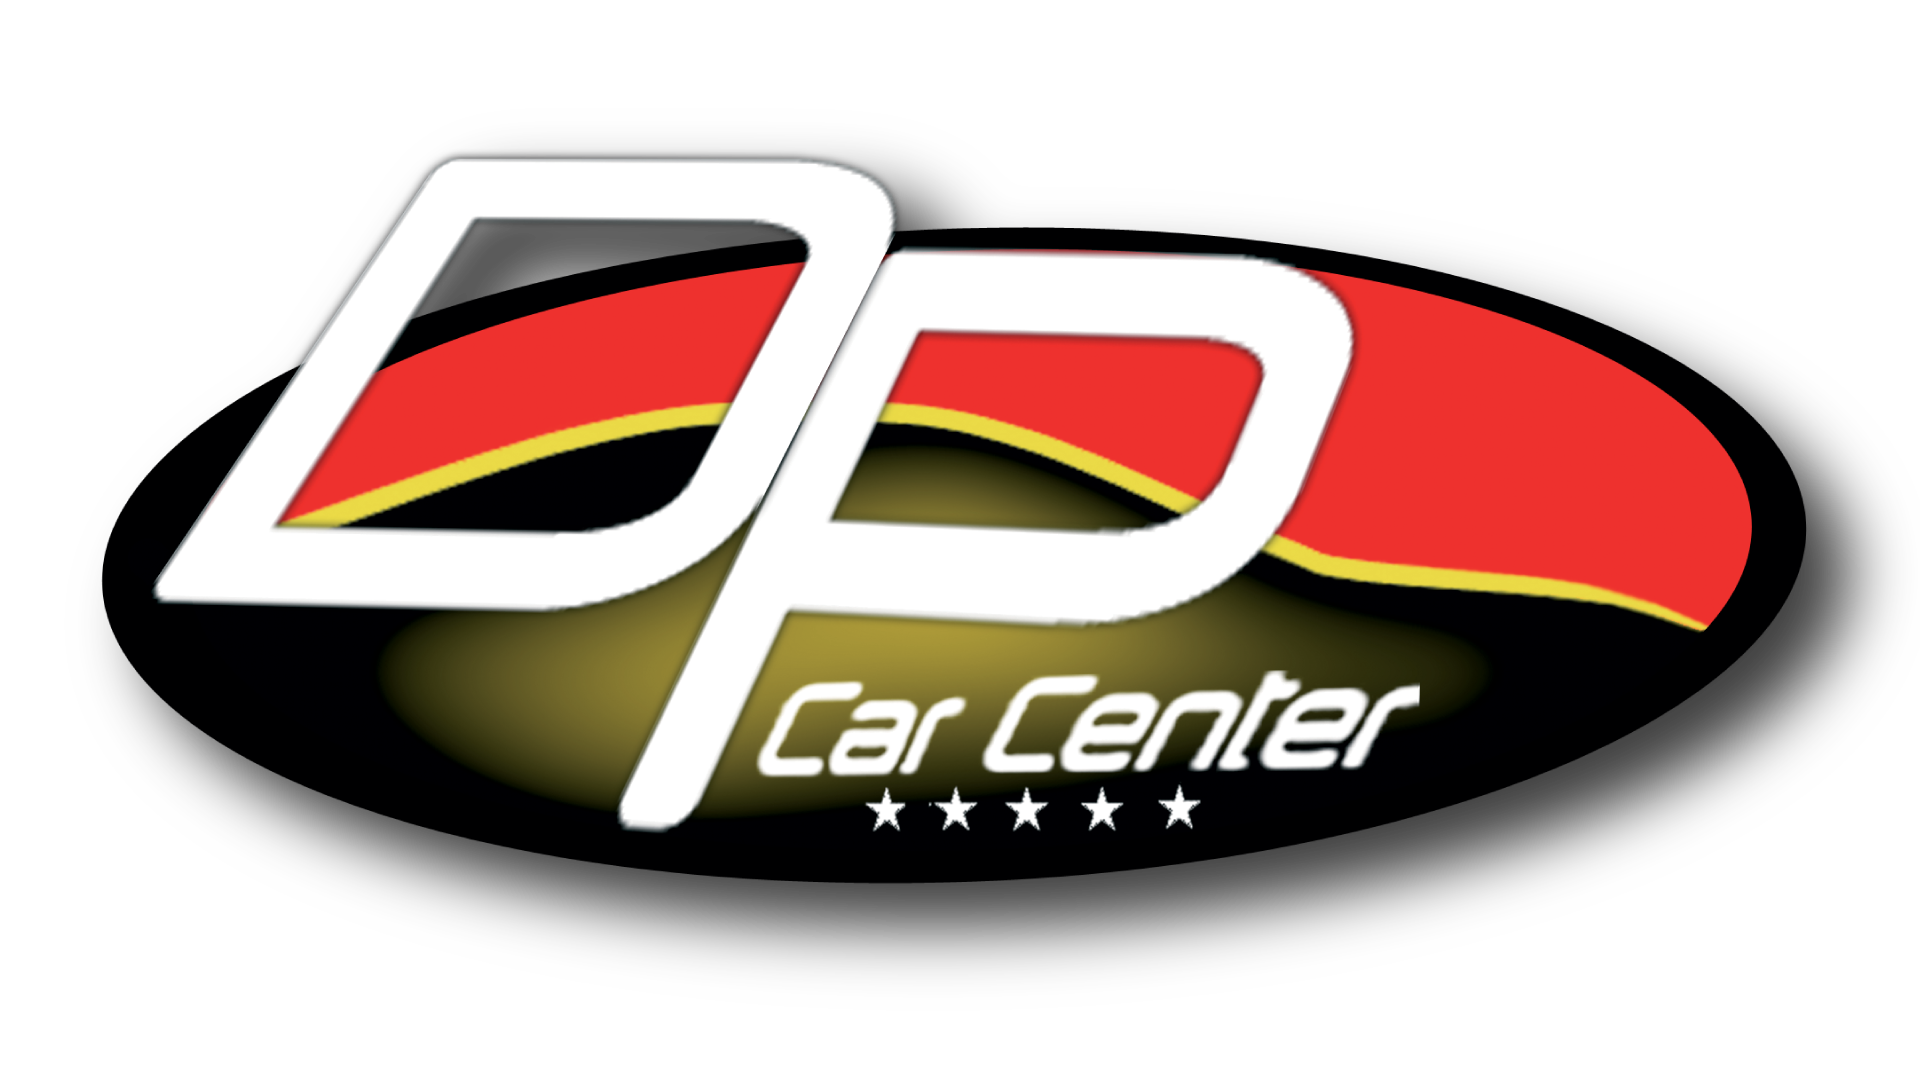 dp_carcenter